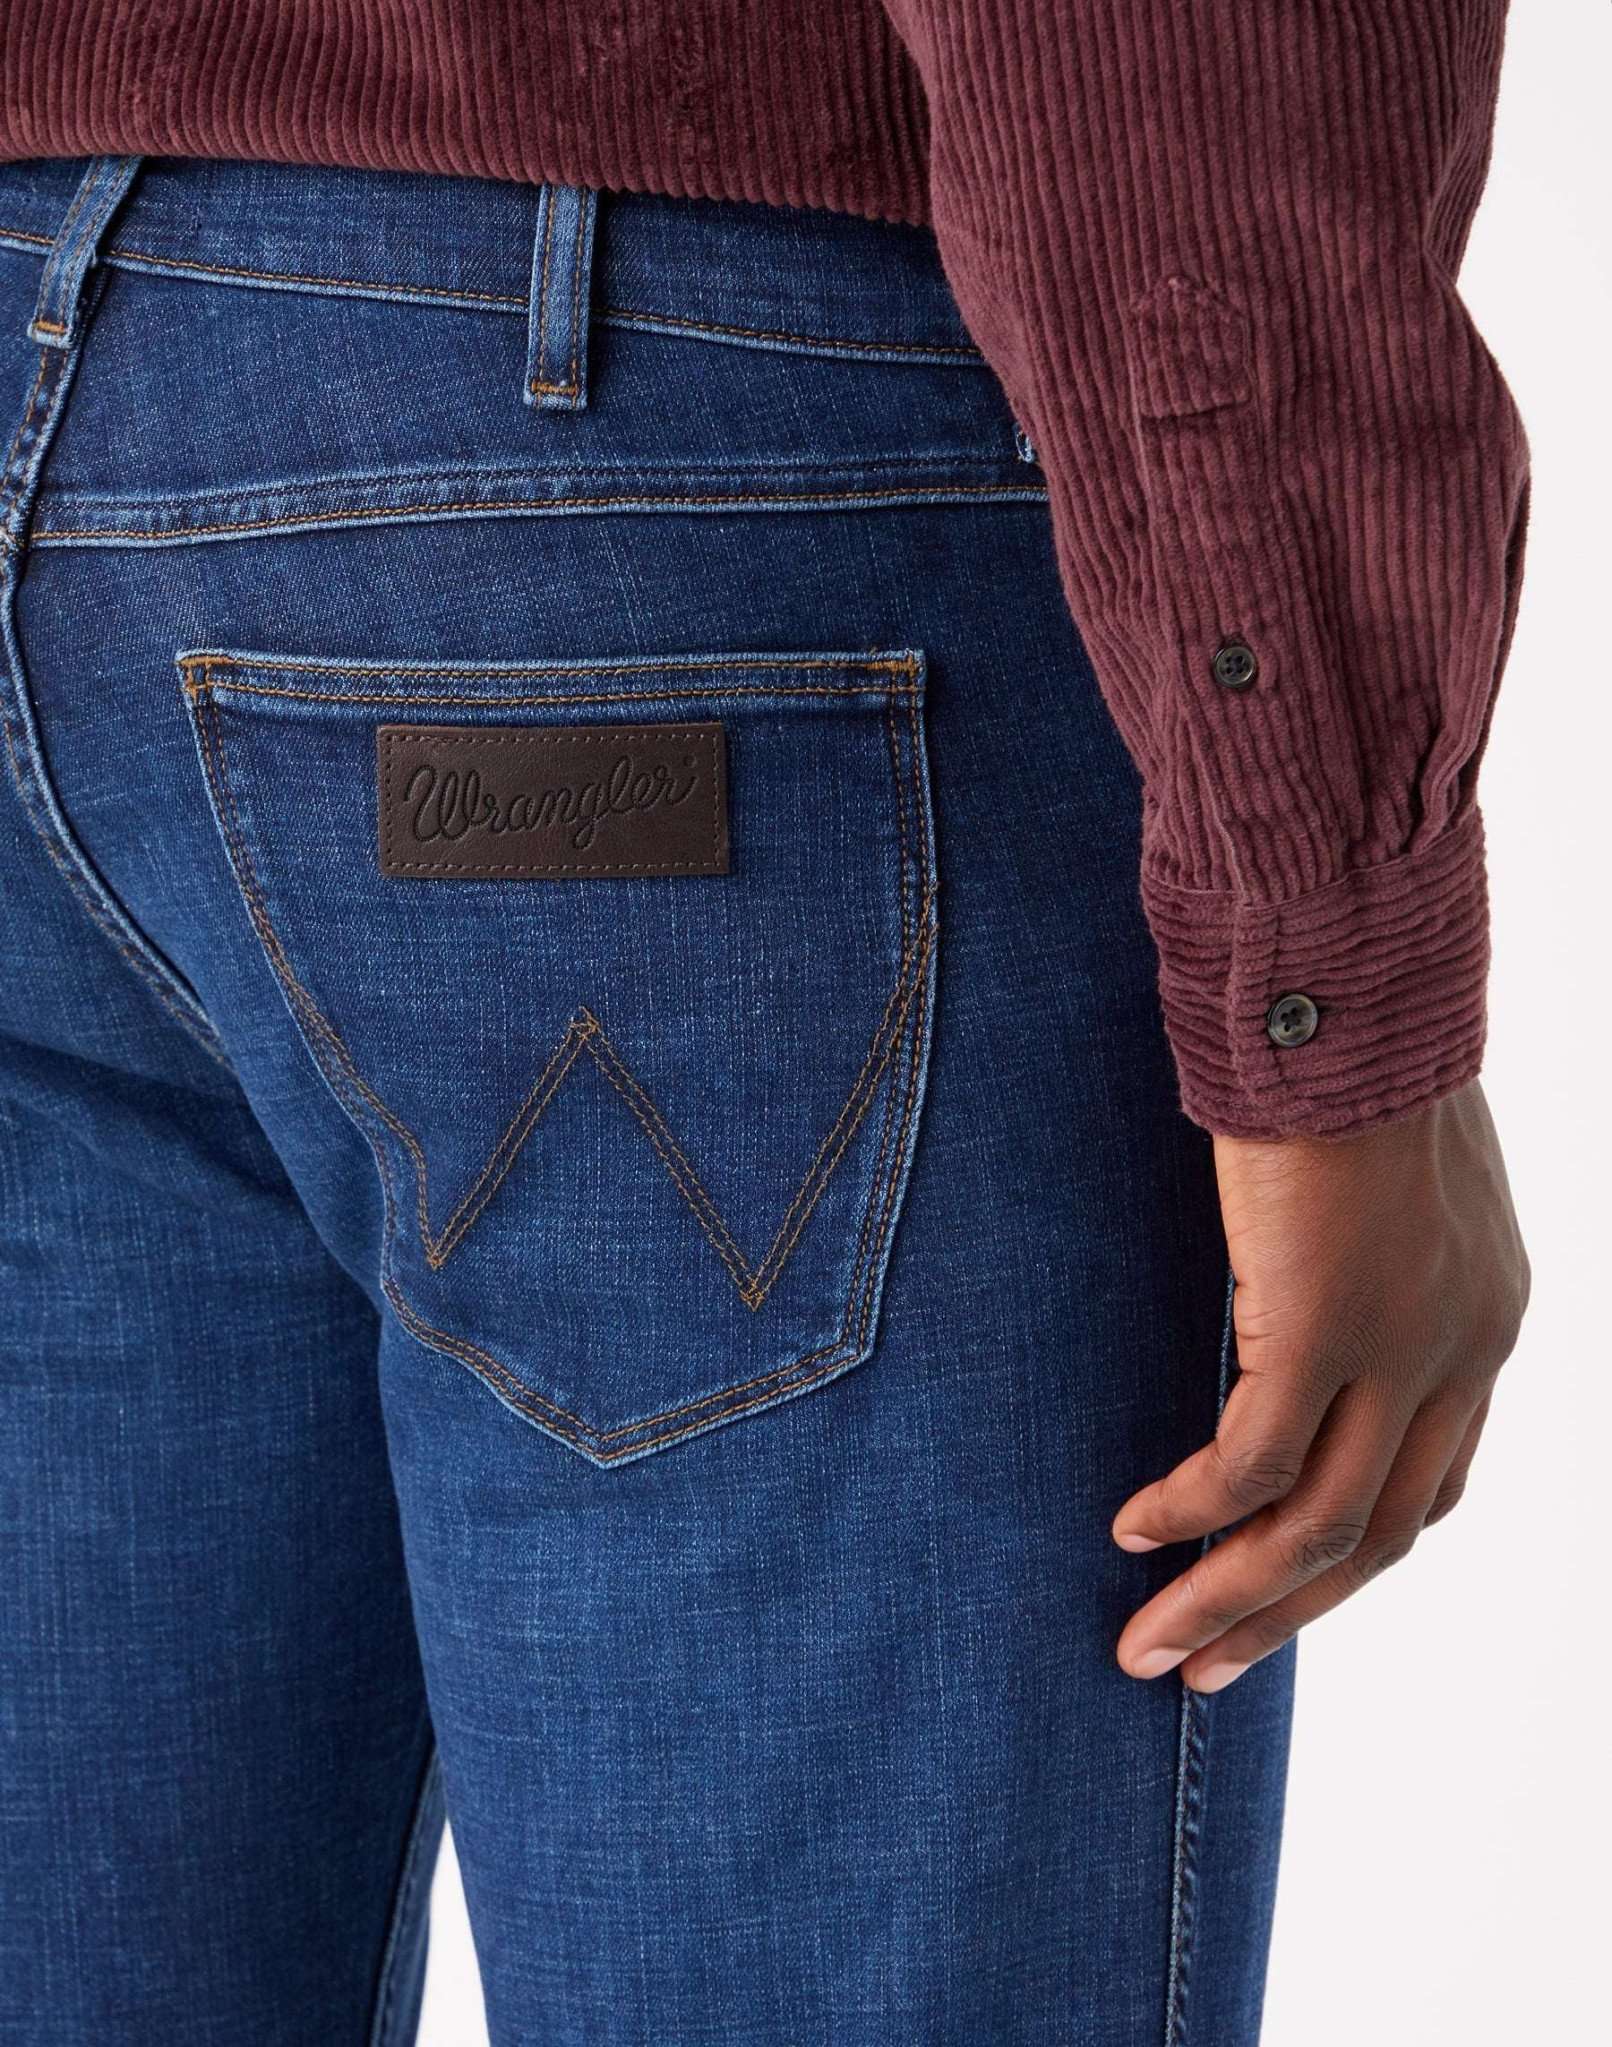 Greensboro Medium Stretch in These Days Jeans Wrangler   